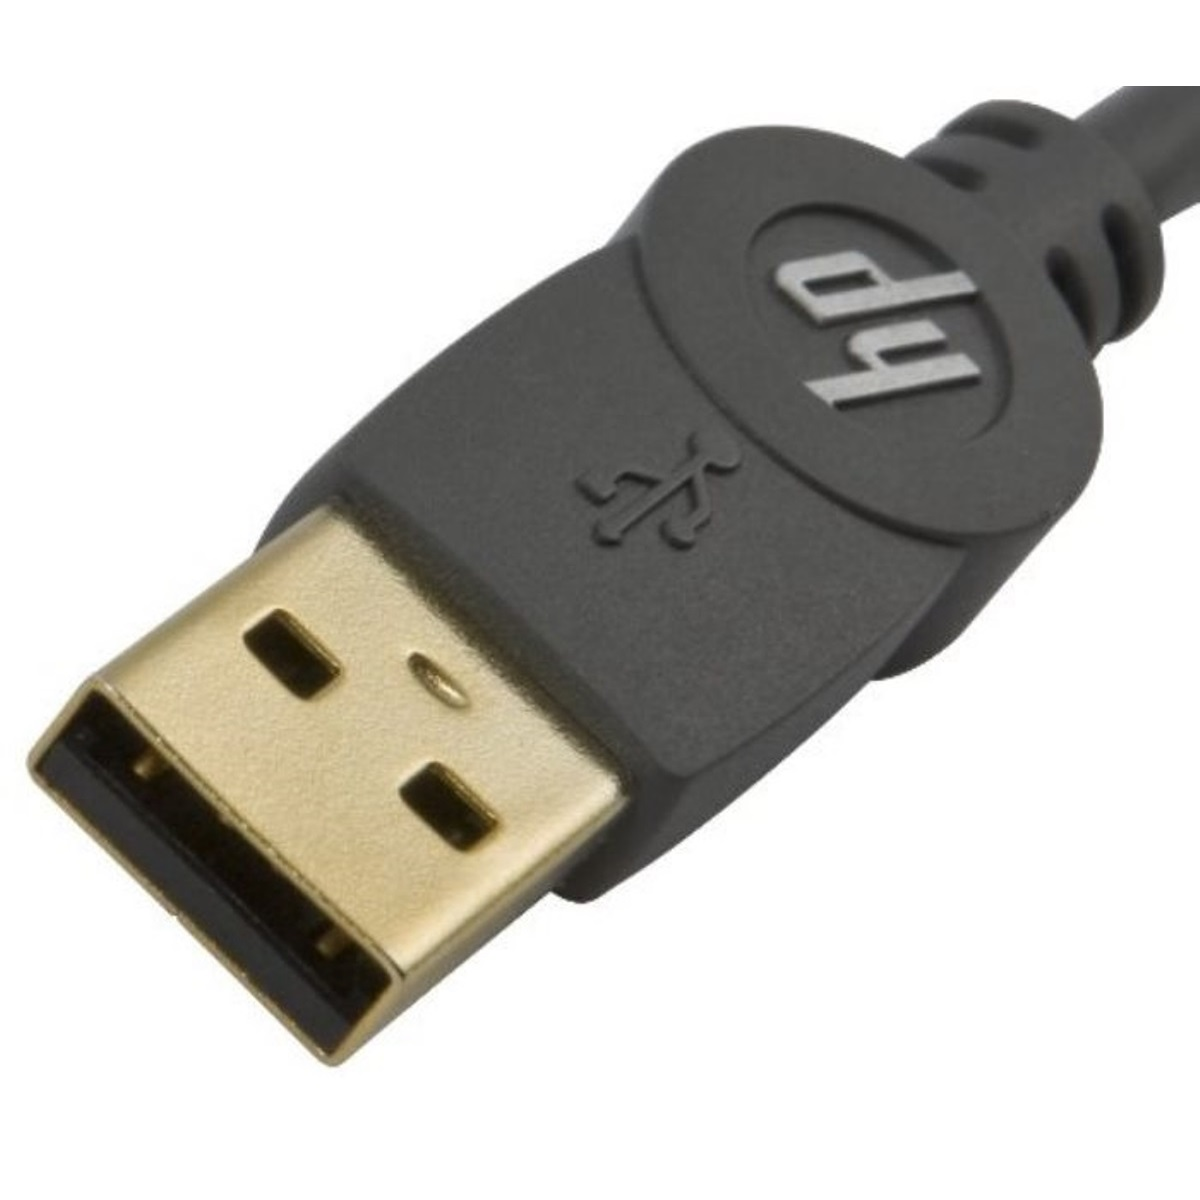 Mini-USB-Kabel 0,9m Mini-USB Kabel, MONSTER CABLE Schwarz HP High-Speed